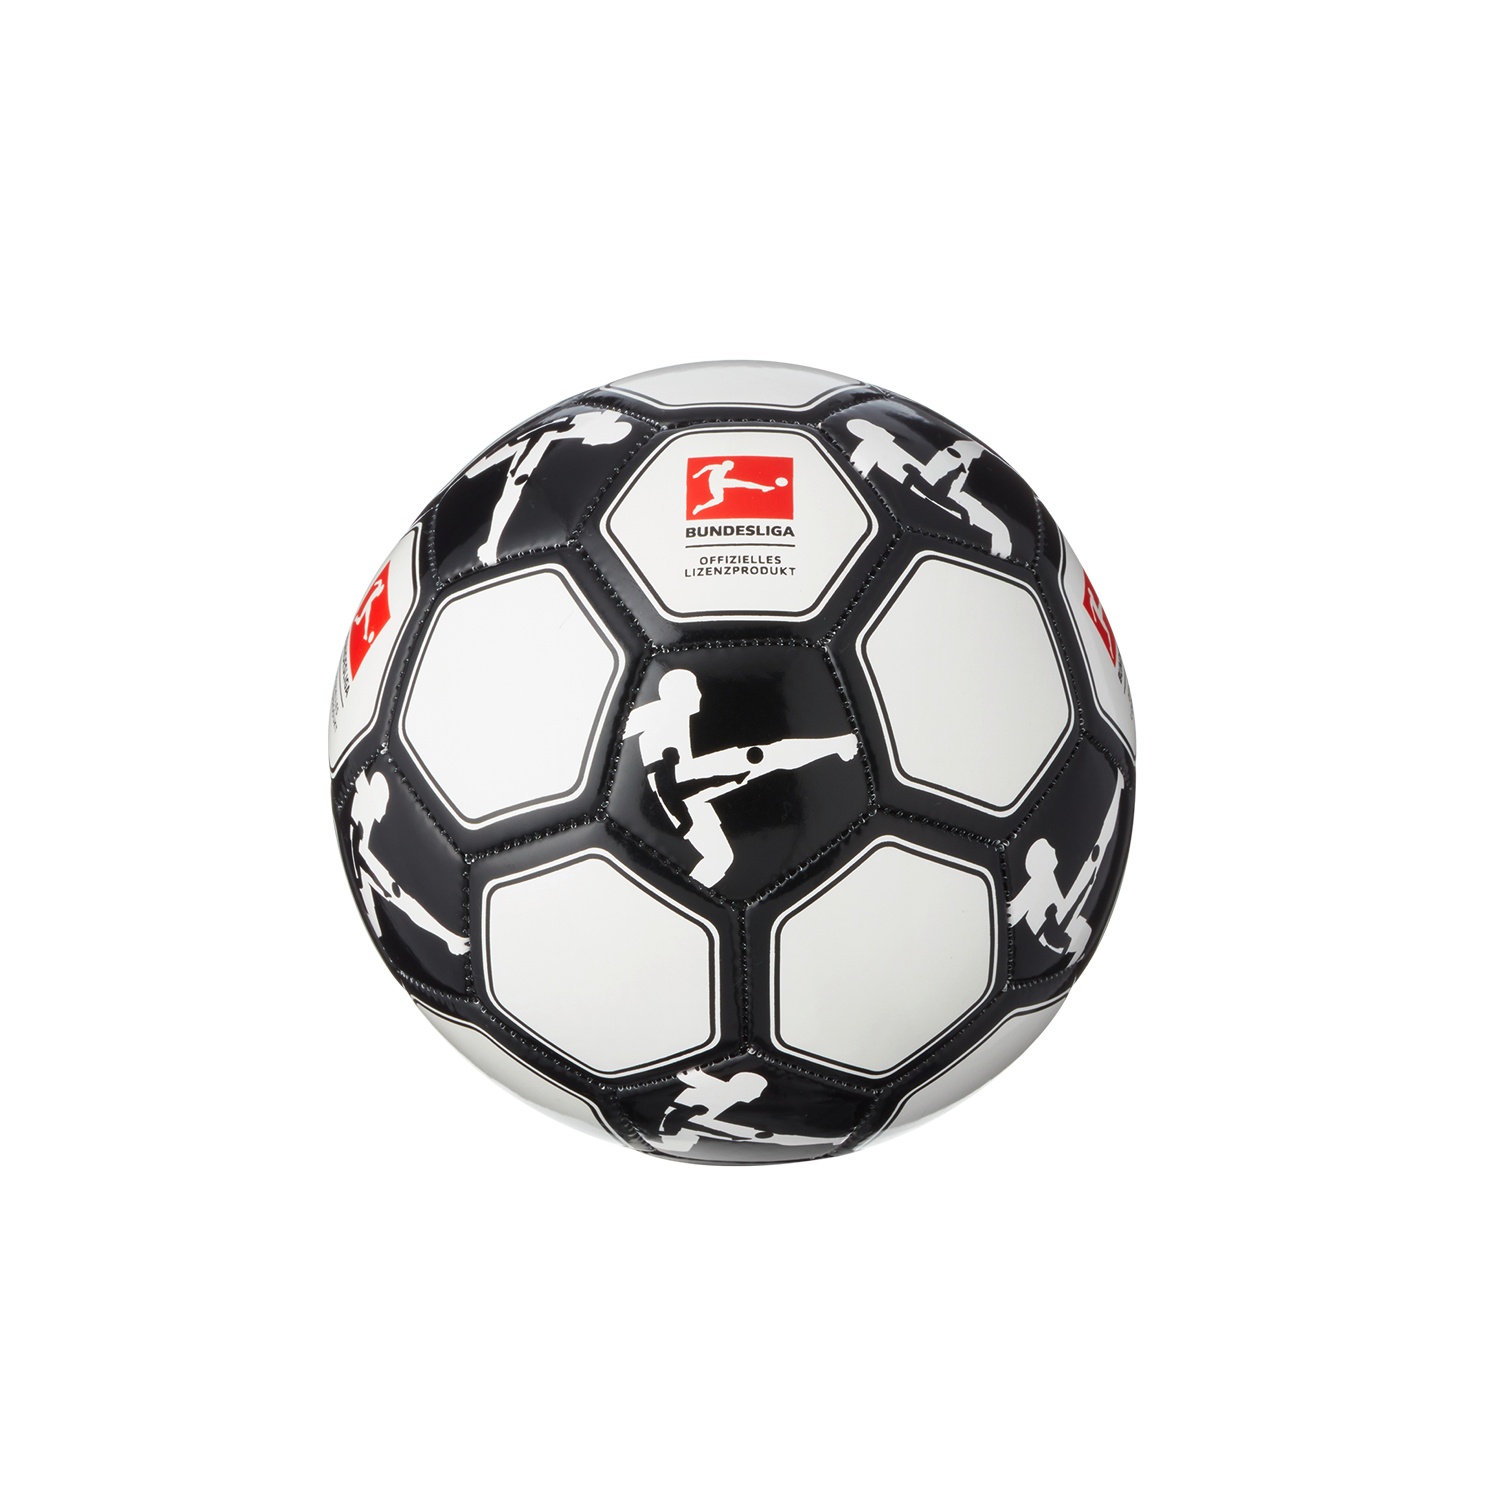 Bundesliga Miniball